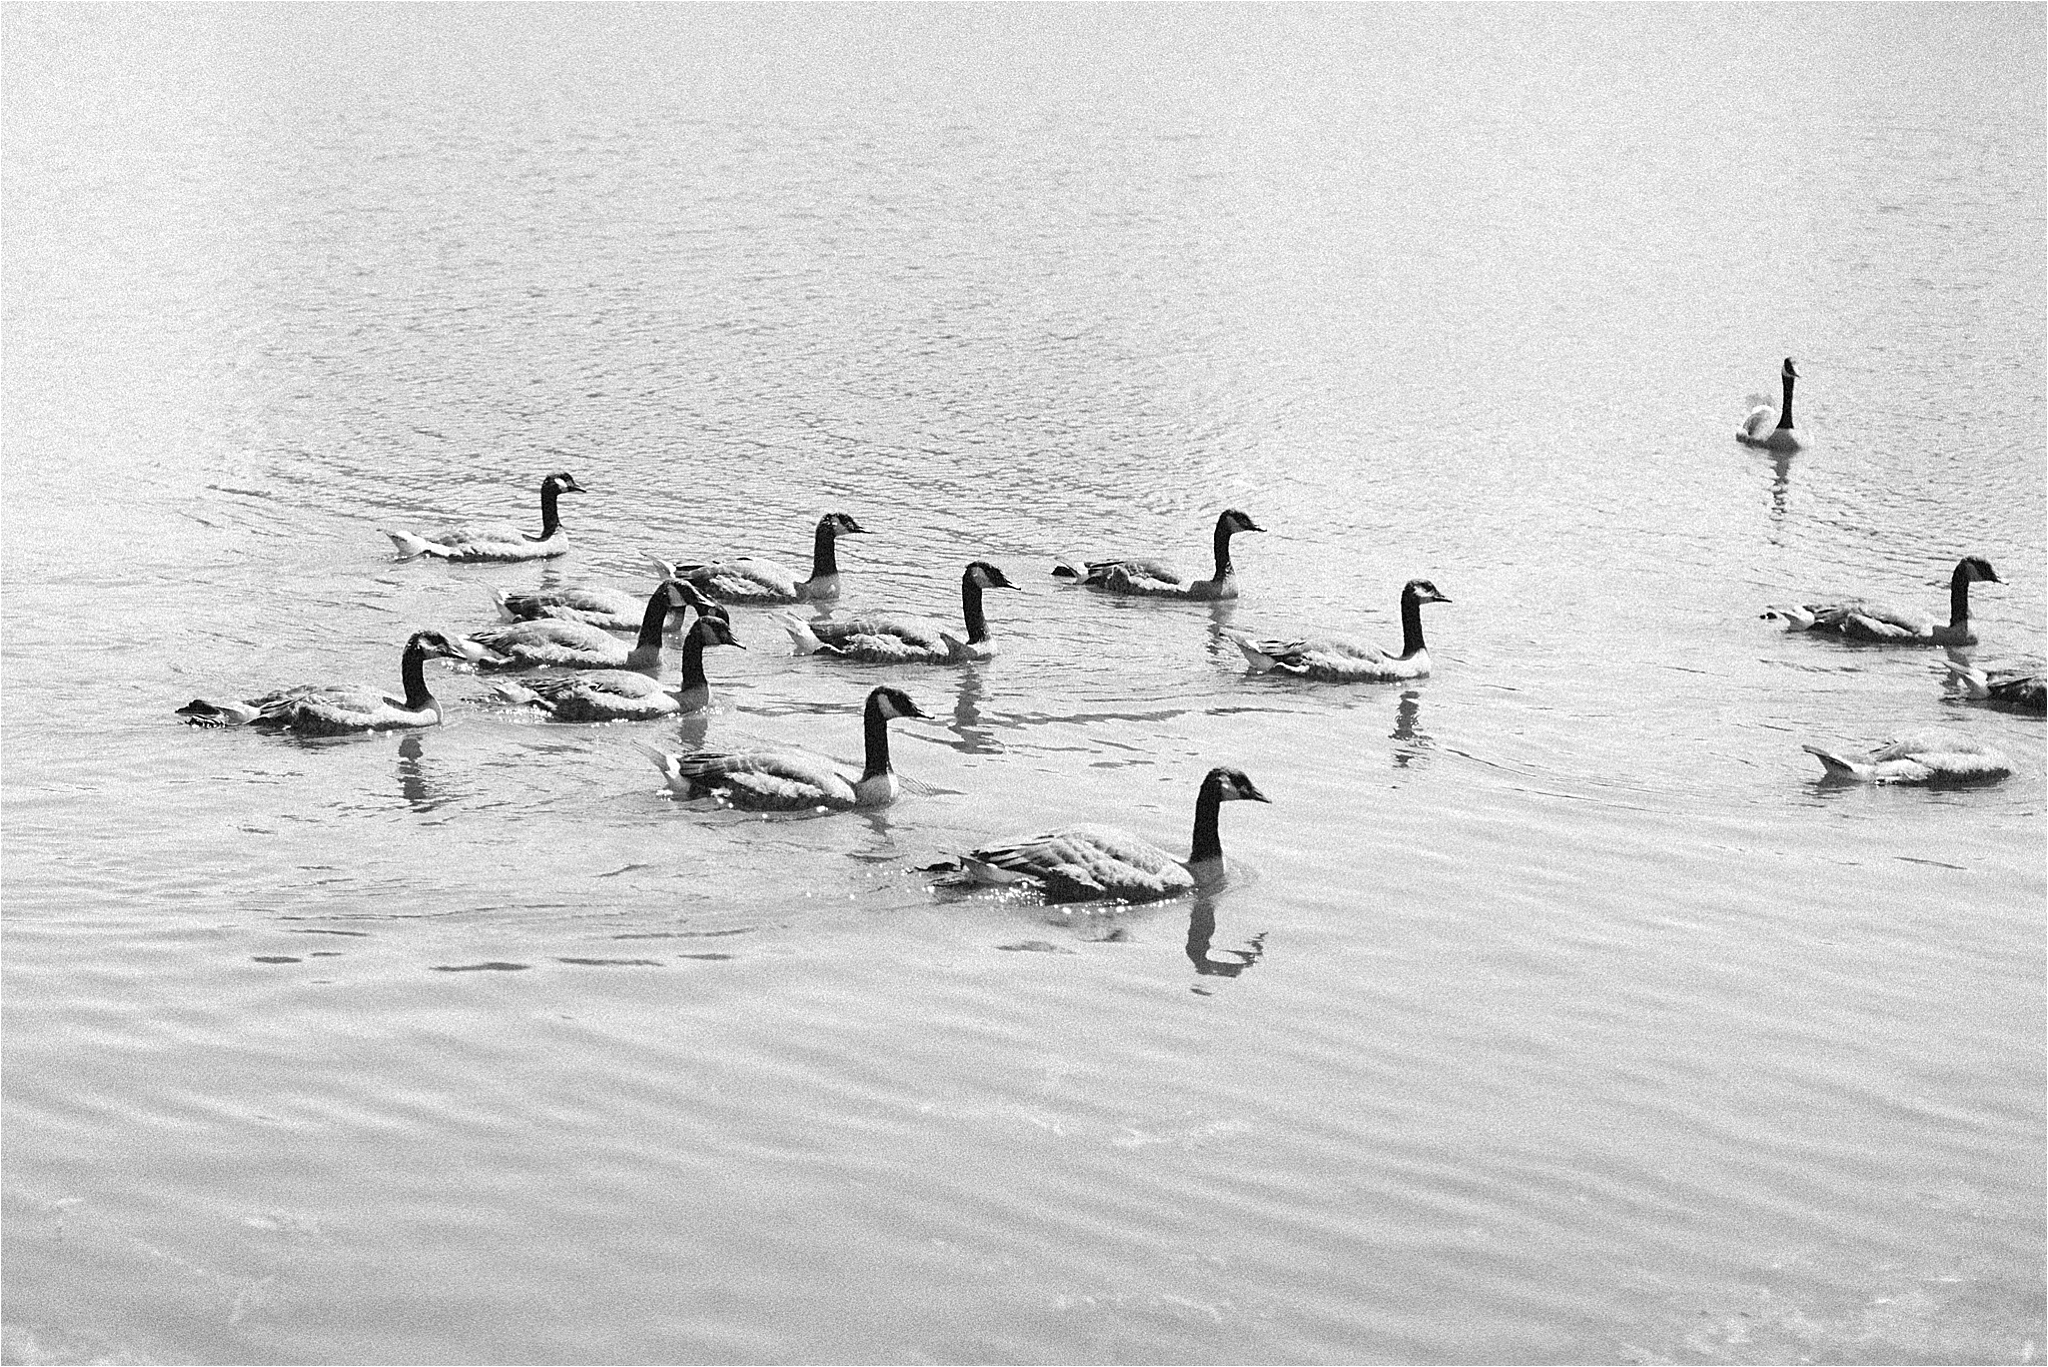 Geese swimming at Wade Oval Lagoon